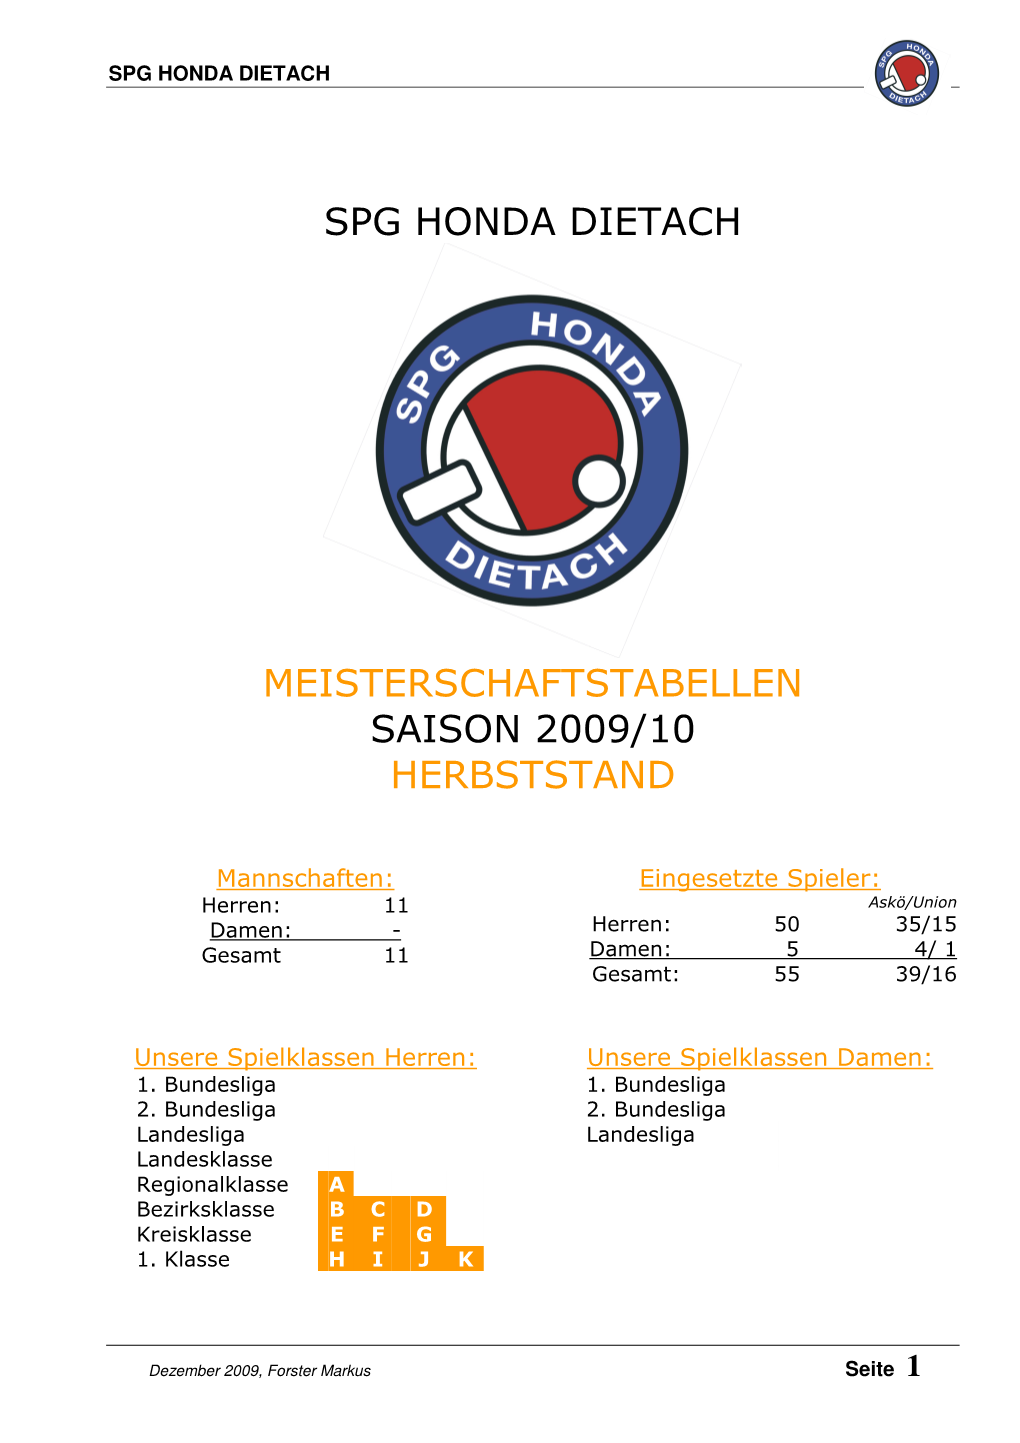 Spg Honda Dietach Meisterschaftstabellen Saison 2009/10 Herbststand